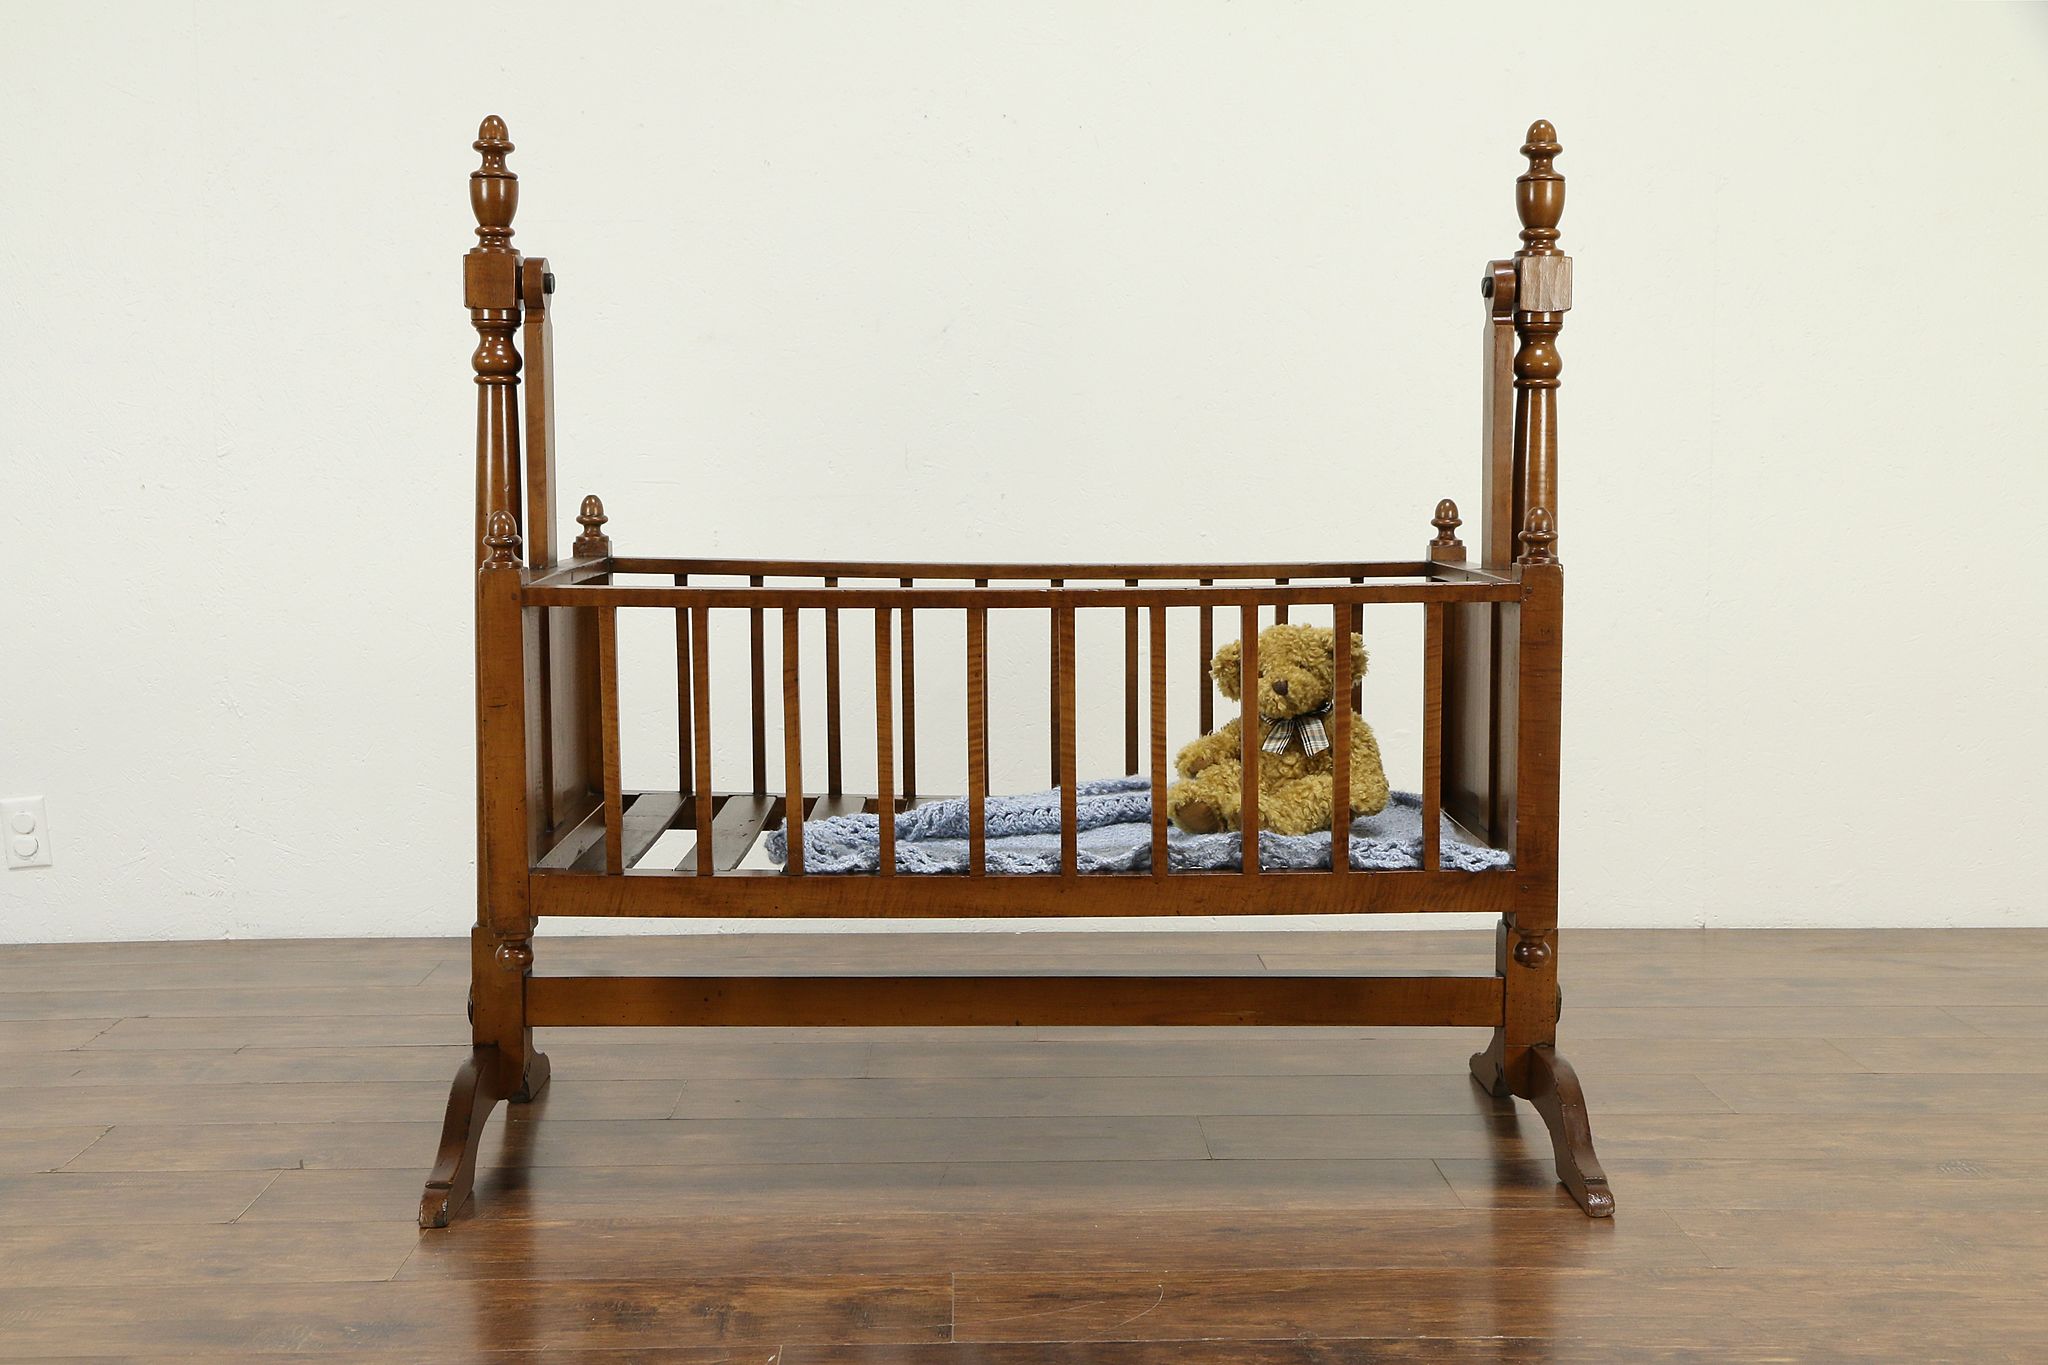 old wooden baby cradle